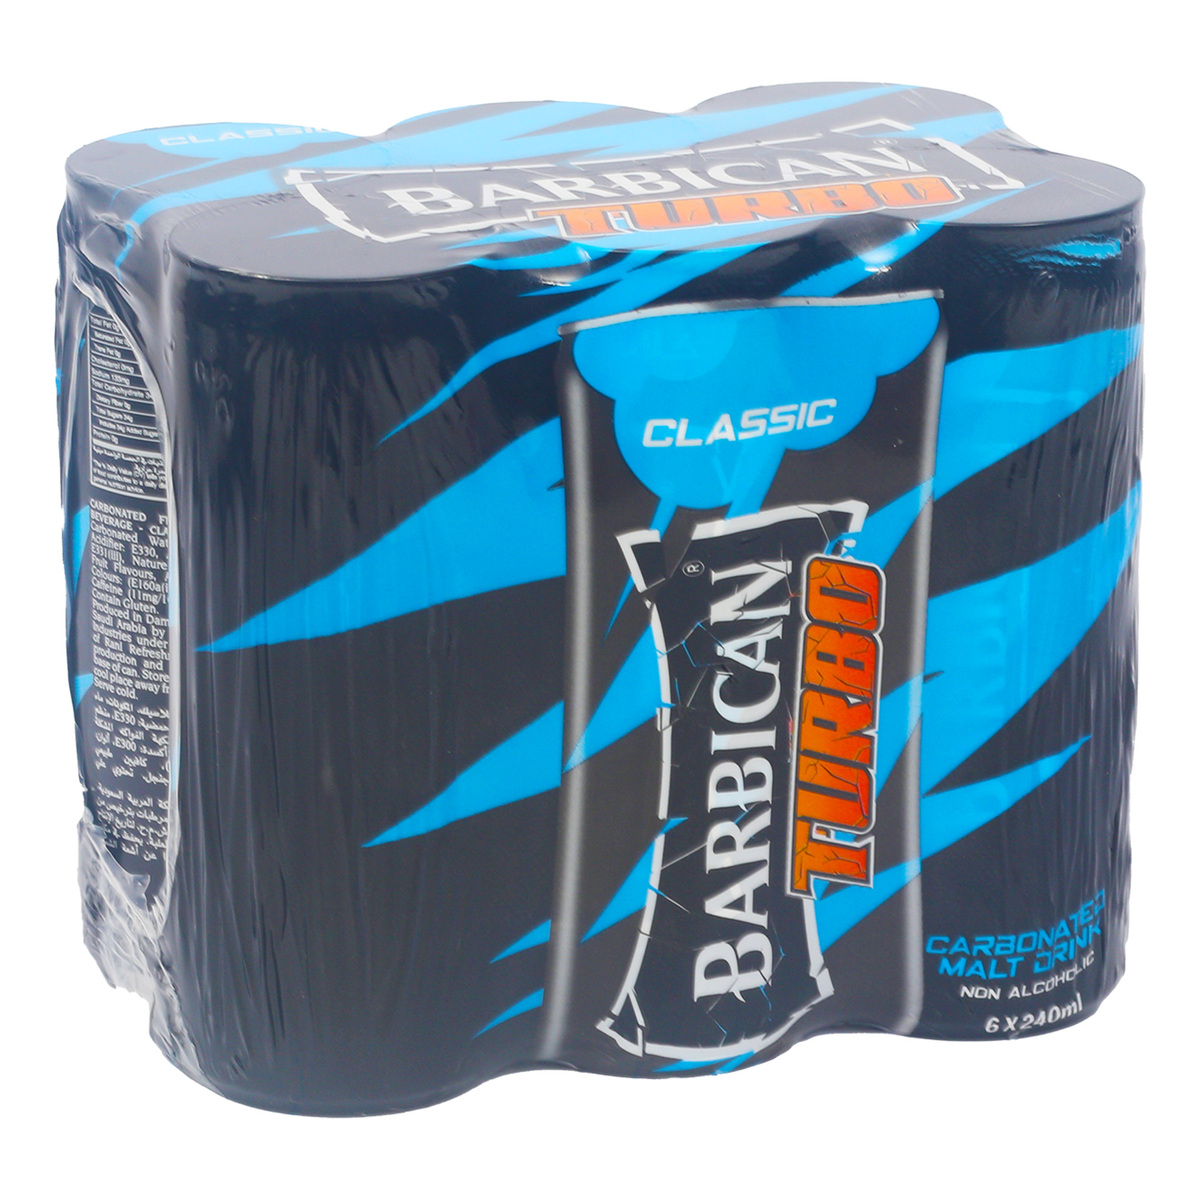 Barbican Turbo Classic Can 6 x 240 ml